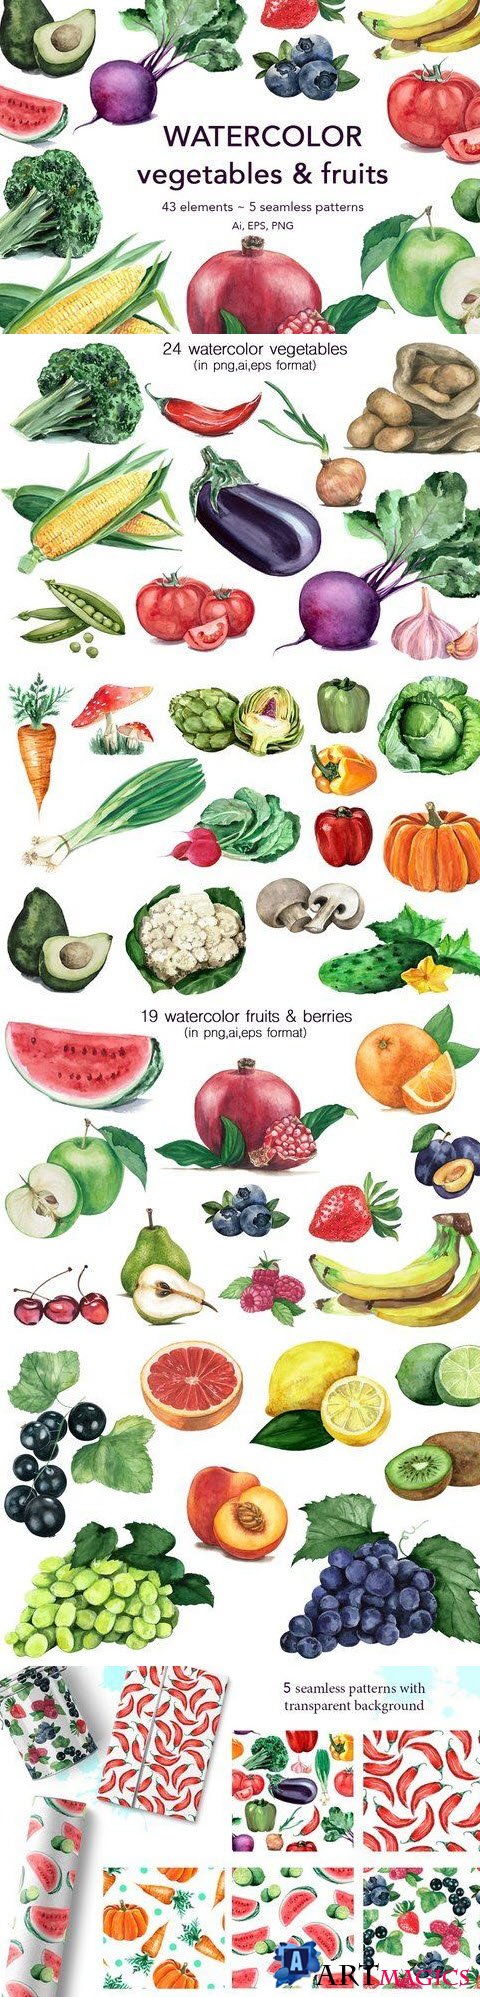 Watercolor vegetables & fruits - 1934987